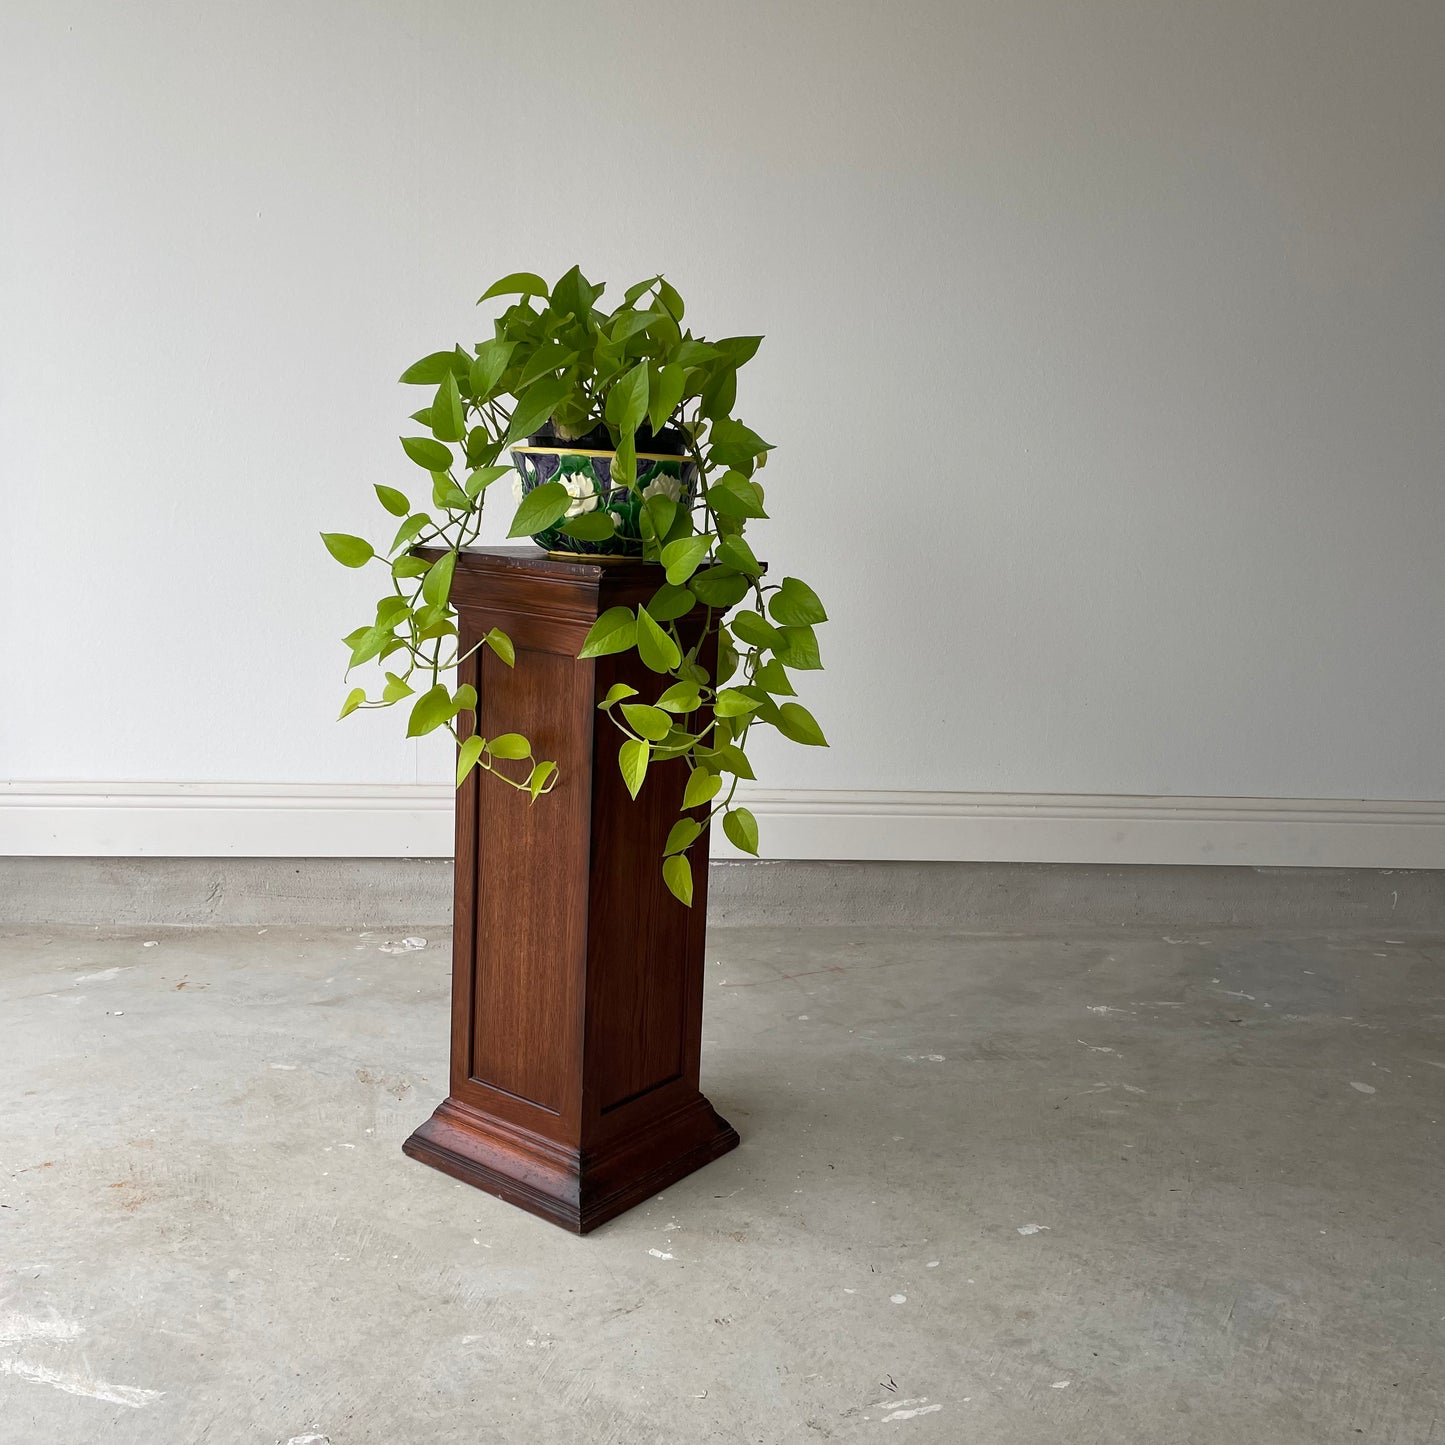 Wooden Pedestal for Plants & Art